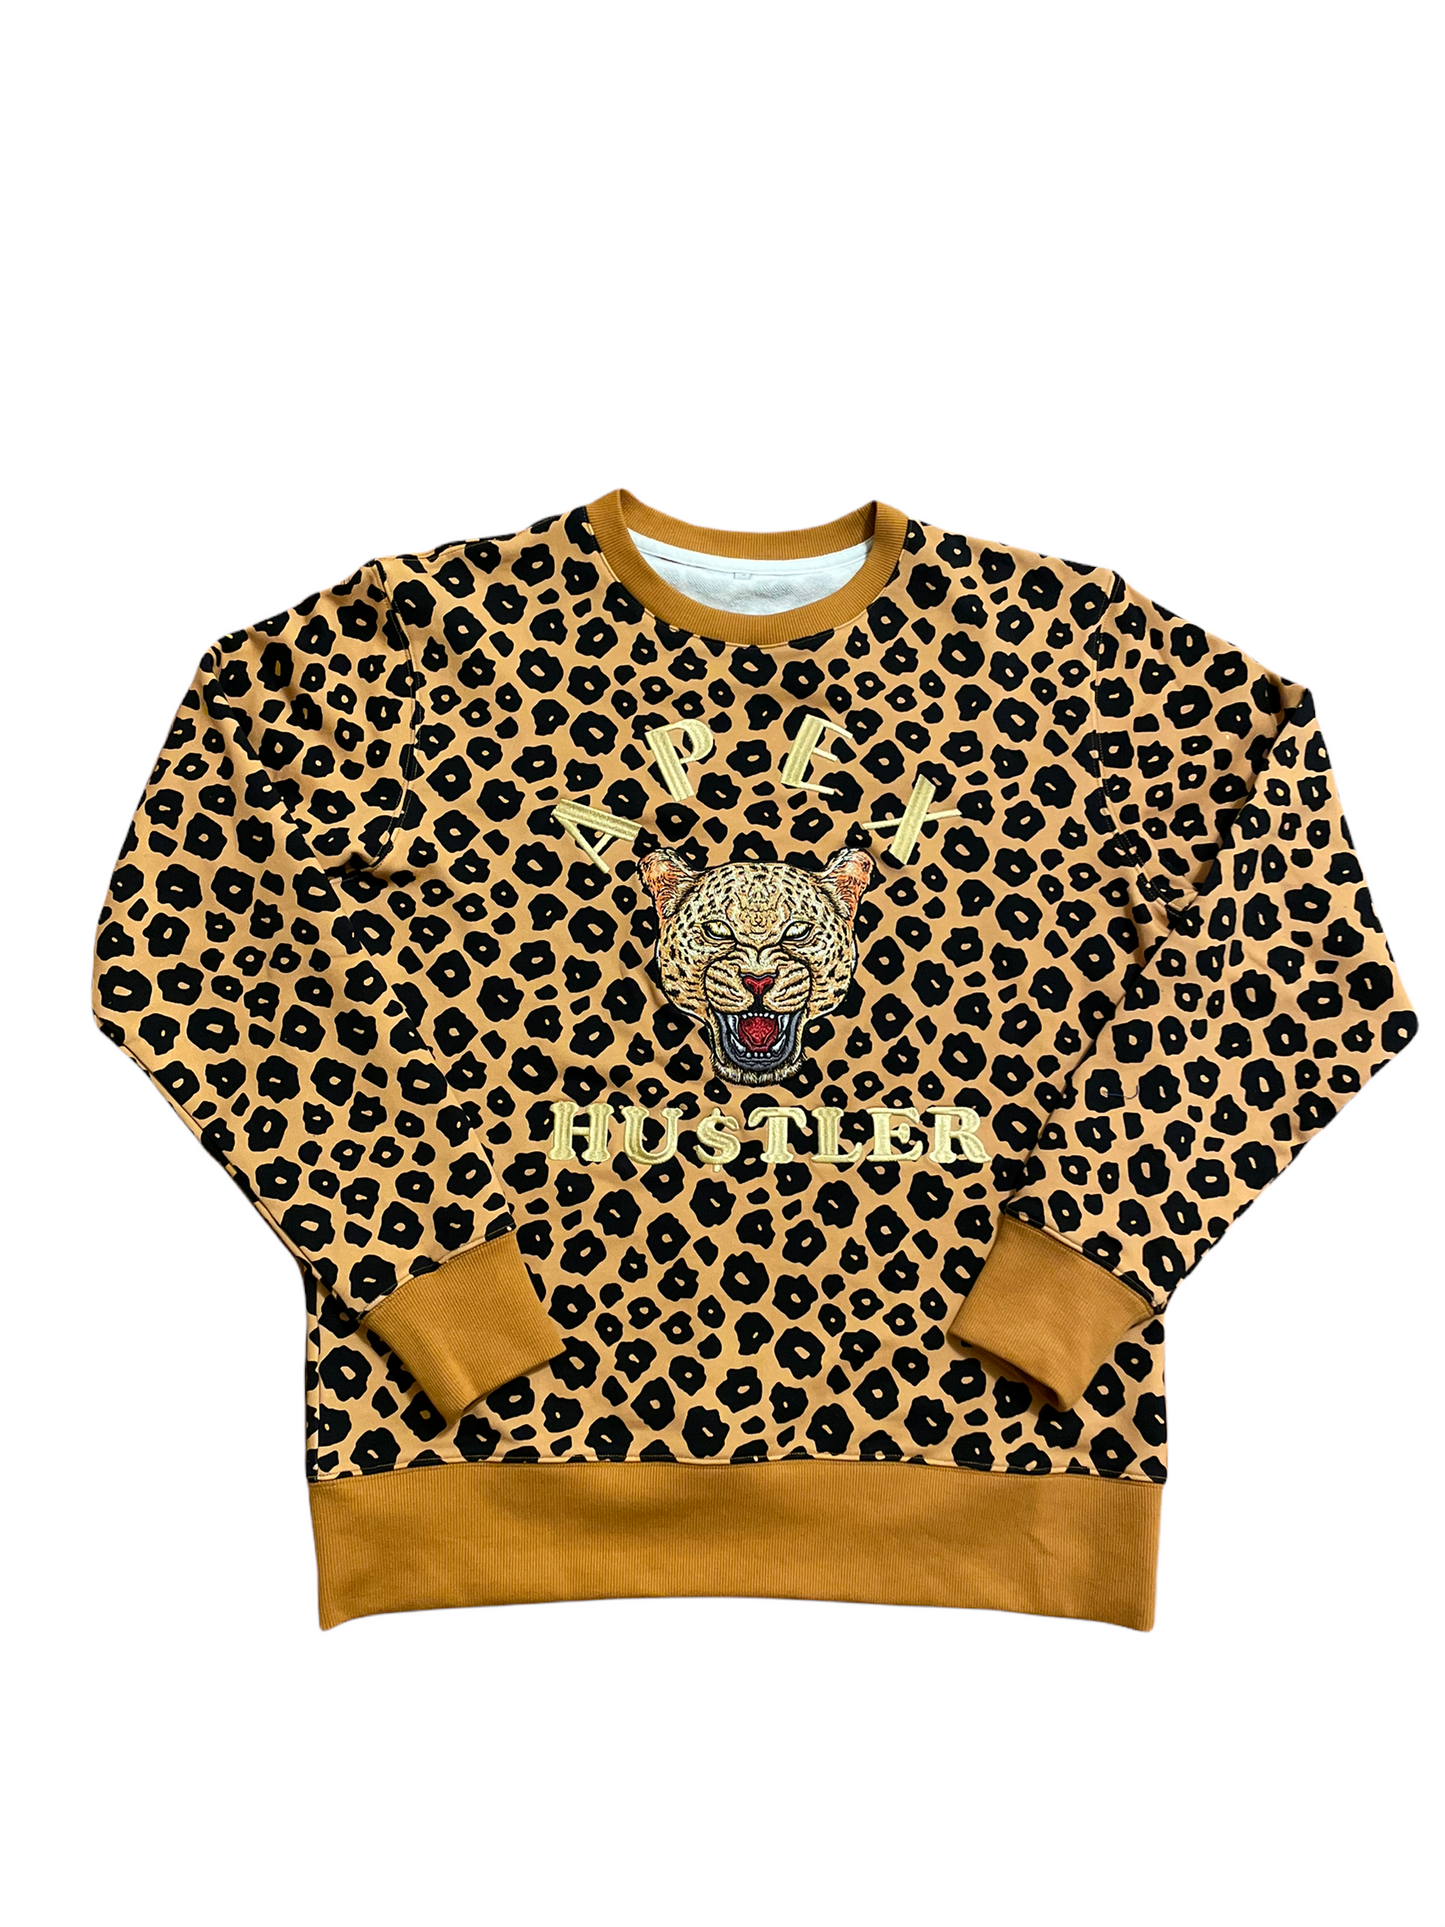 Leopard Print “Apex” Sweatshirt